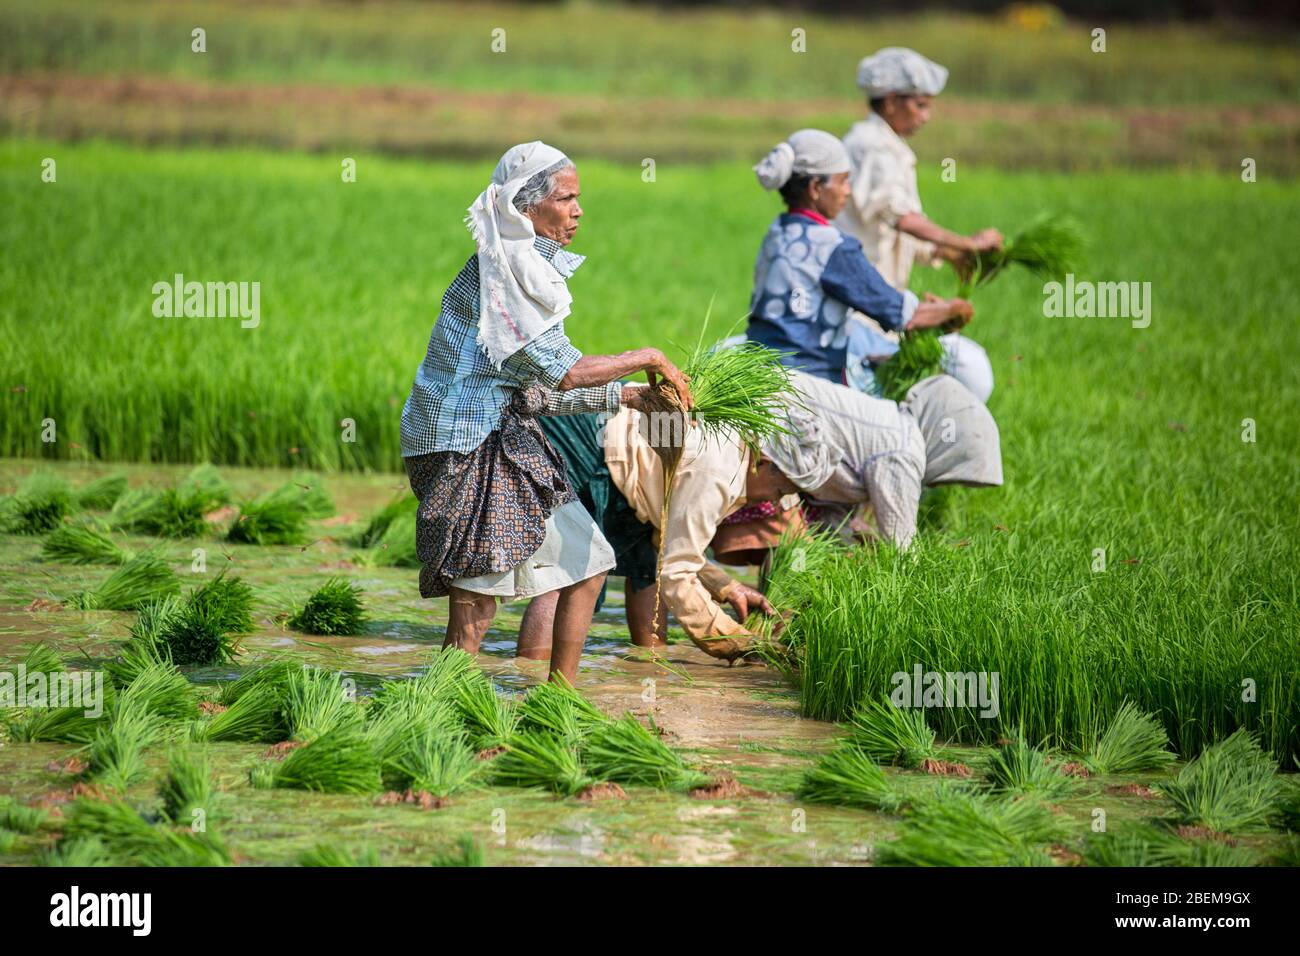 Arbeiterinnen arbeiten auf dem Reisfeld Felder in Kerala, Südindien, Indien, Asien, Landwirtschaft in Indien, Kerala, Reisanbau, pradeep Subramanian Stockfoto